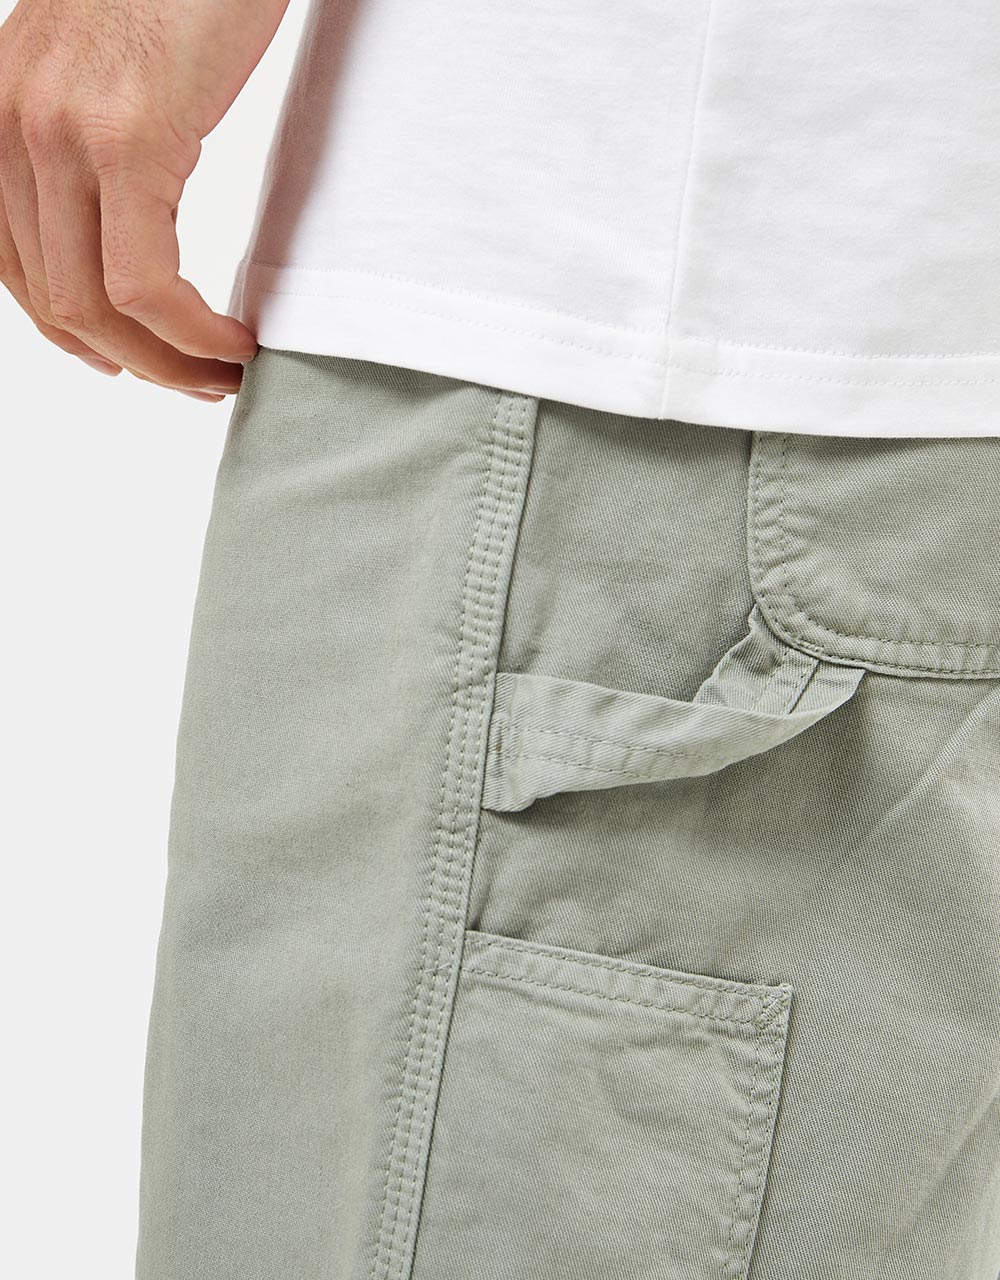 Carhartt WIP Single Knee Short - Yucca (Garment Dyed)